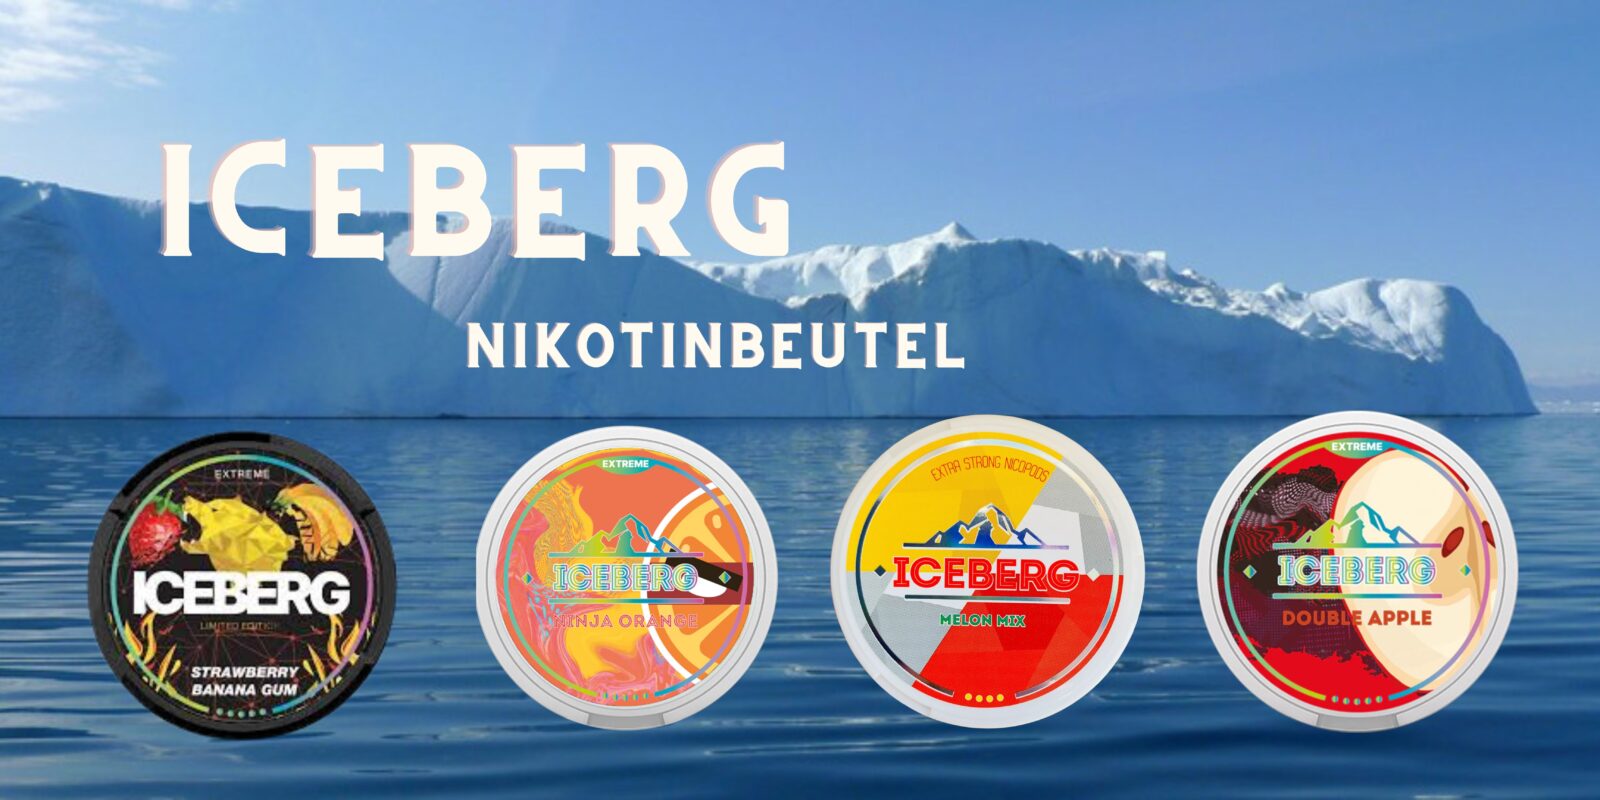 Iceberg Double Apple SNUS/NIKOTINBEUTEL - XMANIA Deutschland 14